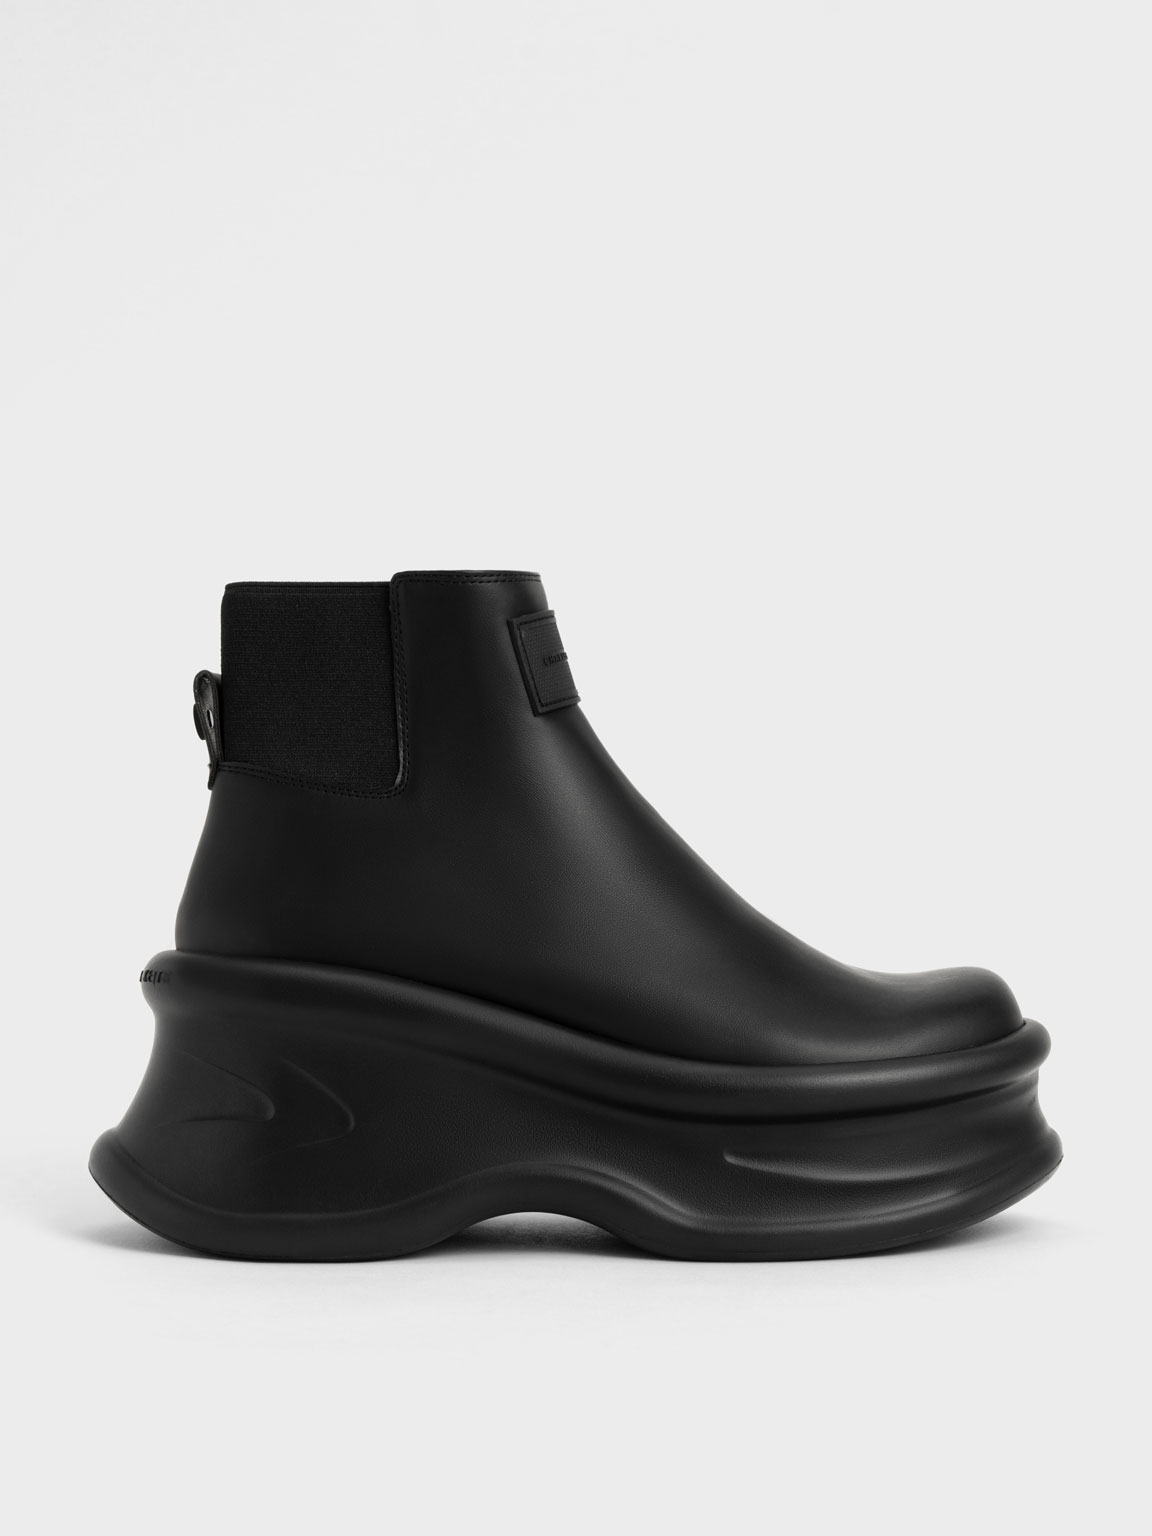 Black Curved Platform Ankle Boots - CHARLES & KEITH UK